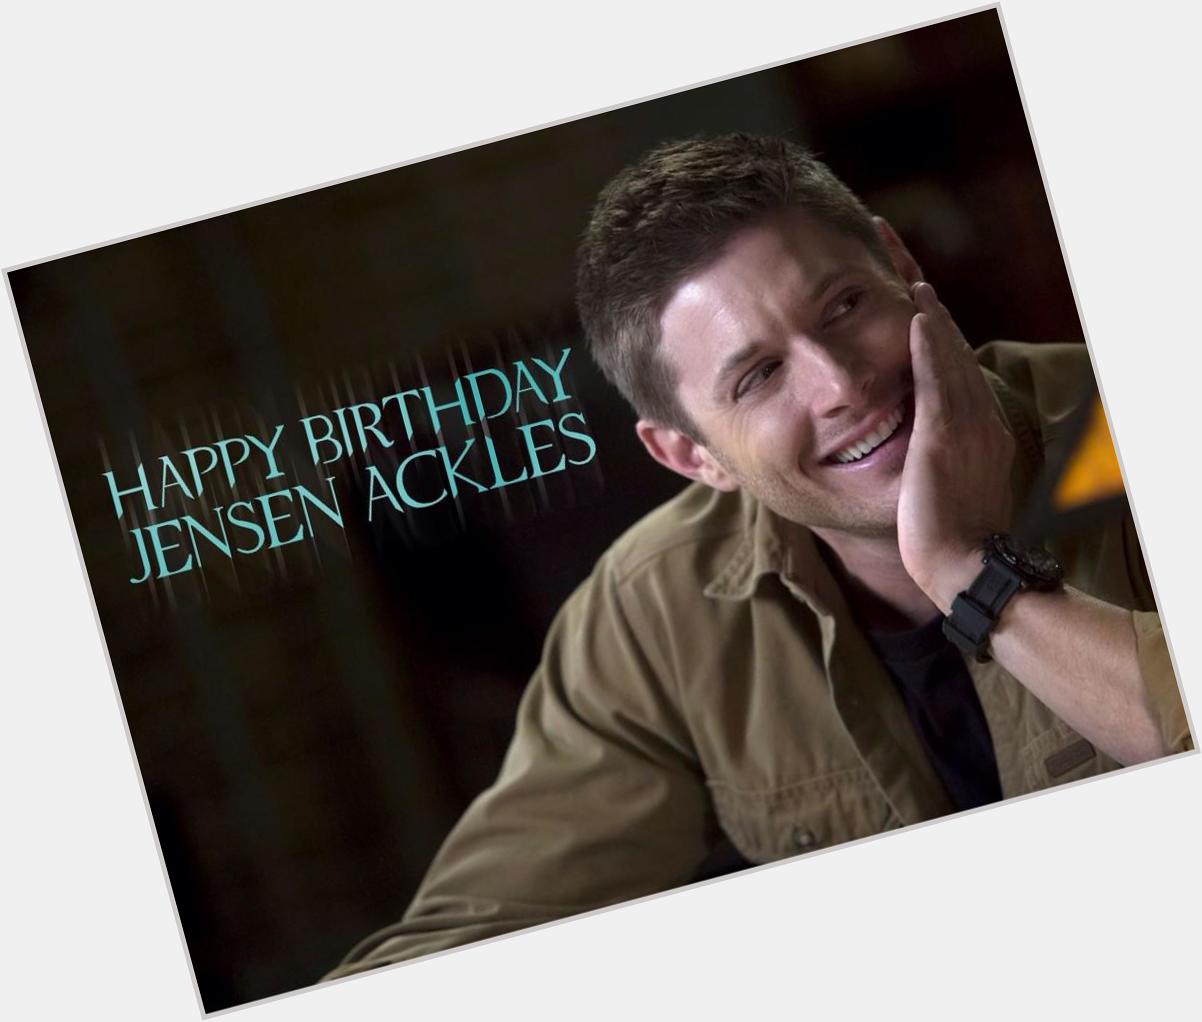 Happy Birthday Jensen Ackles!       